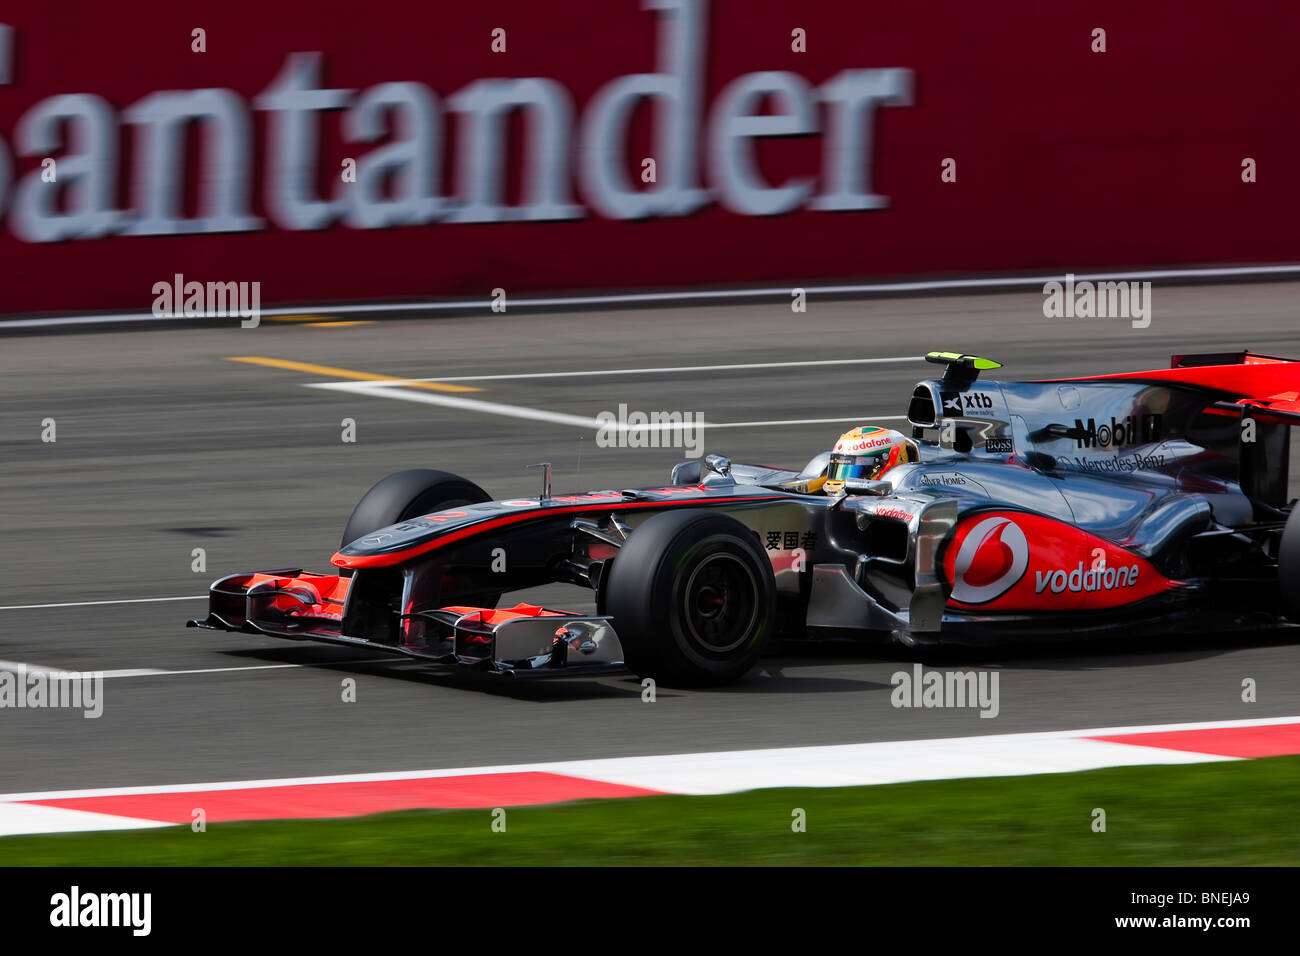 Lewis Hamilton at speed Silverstone UK Stock Photo